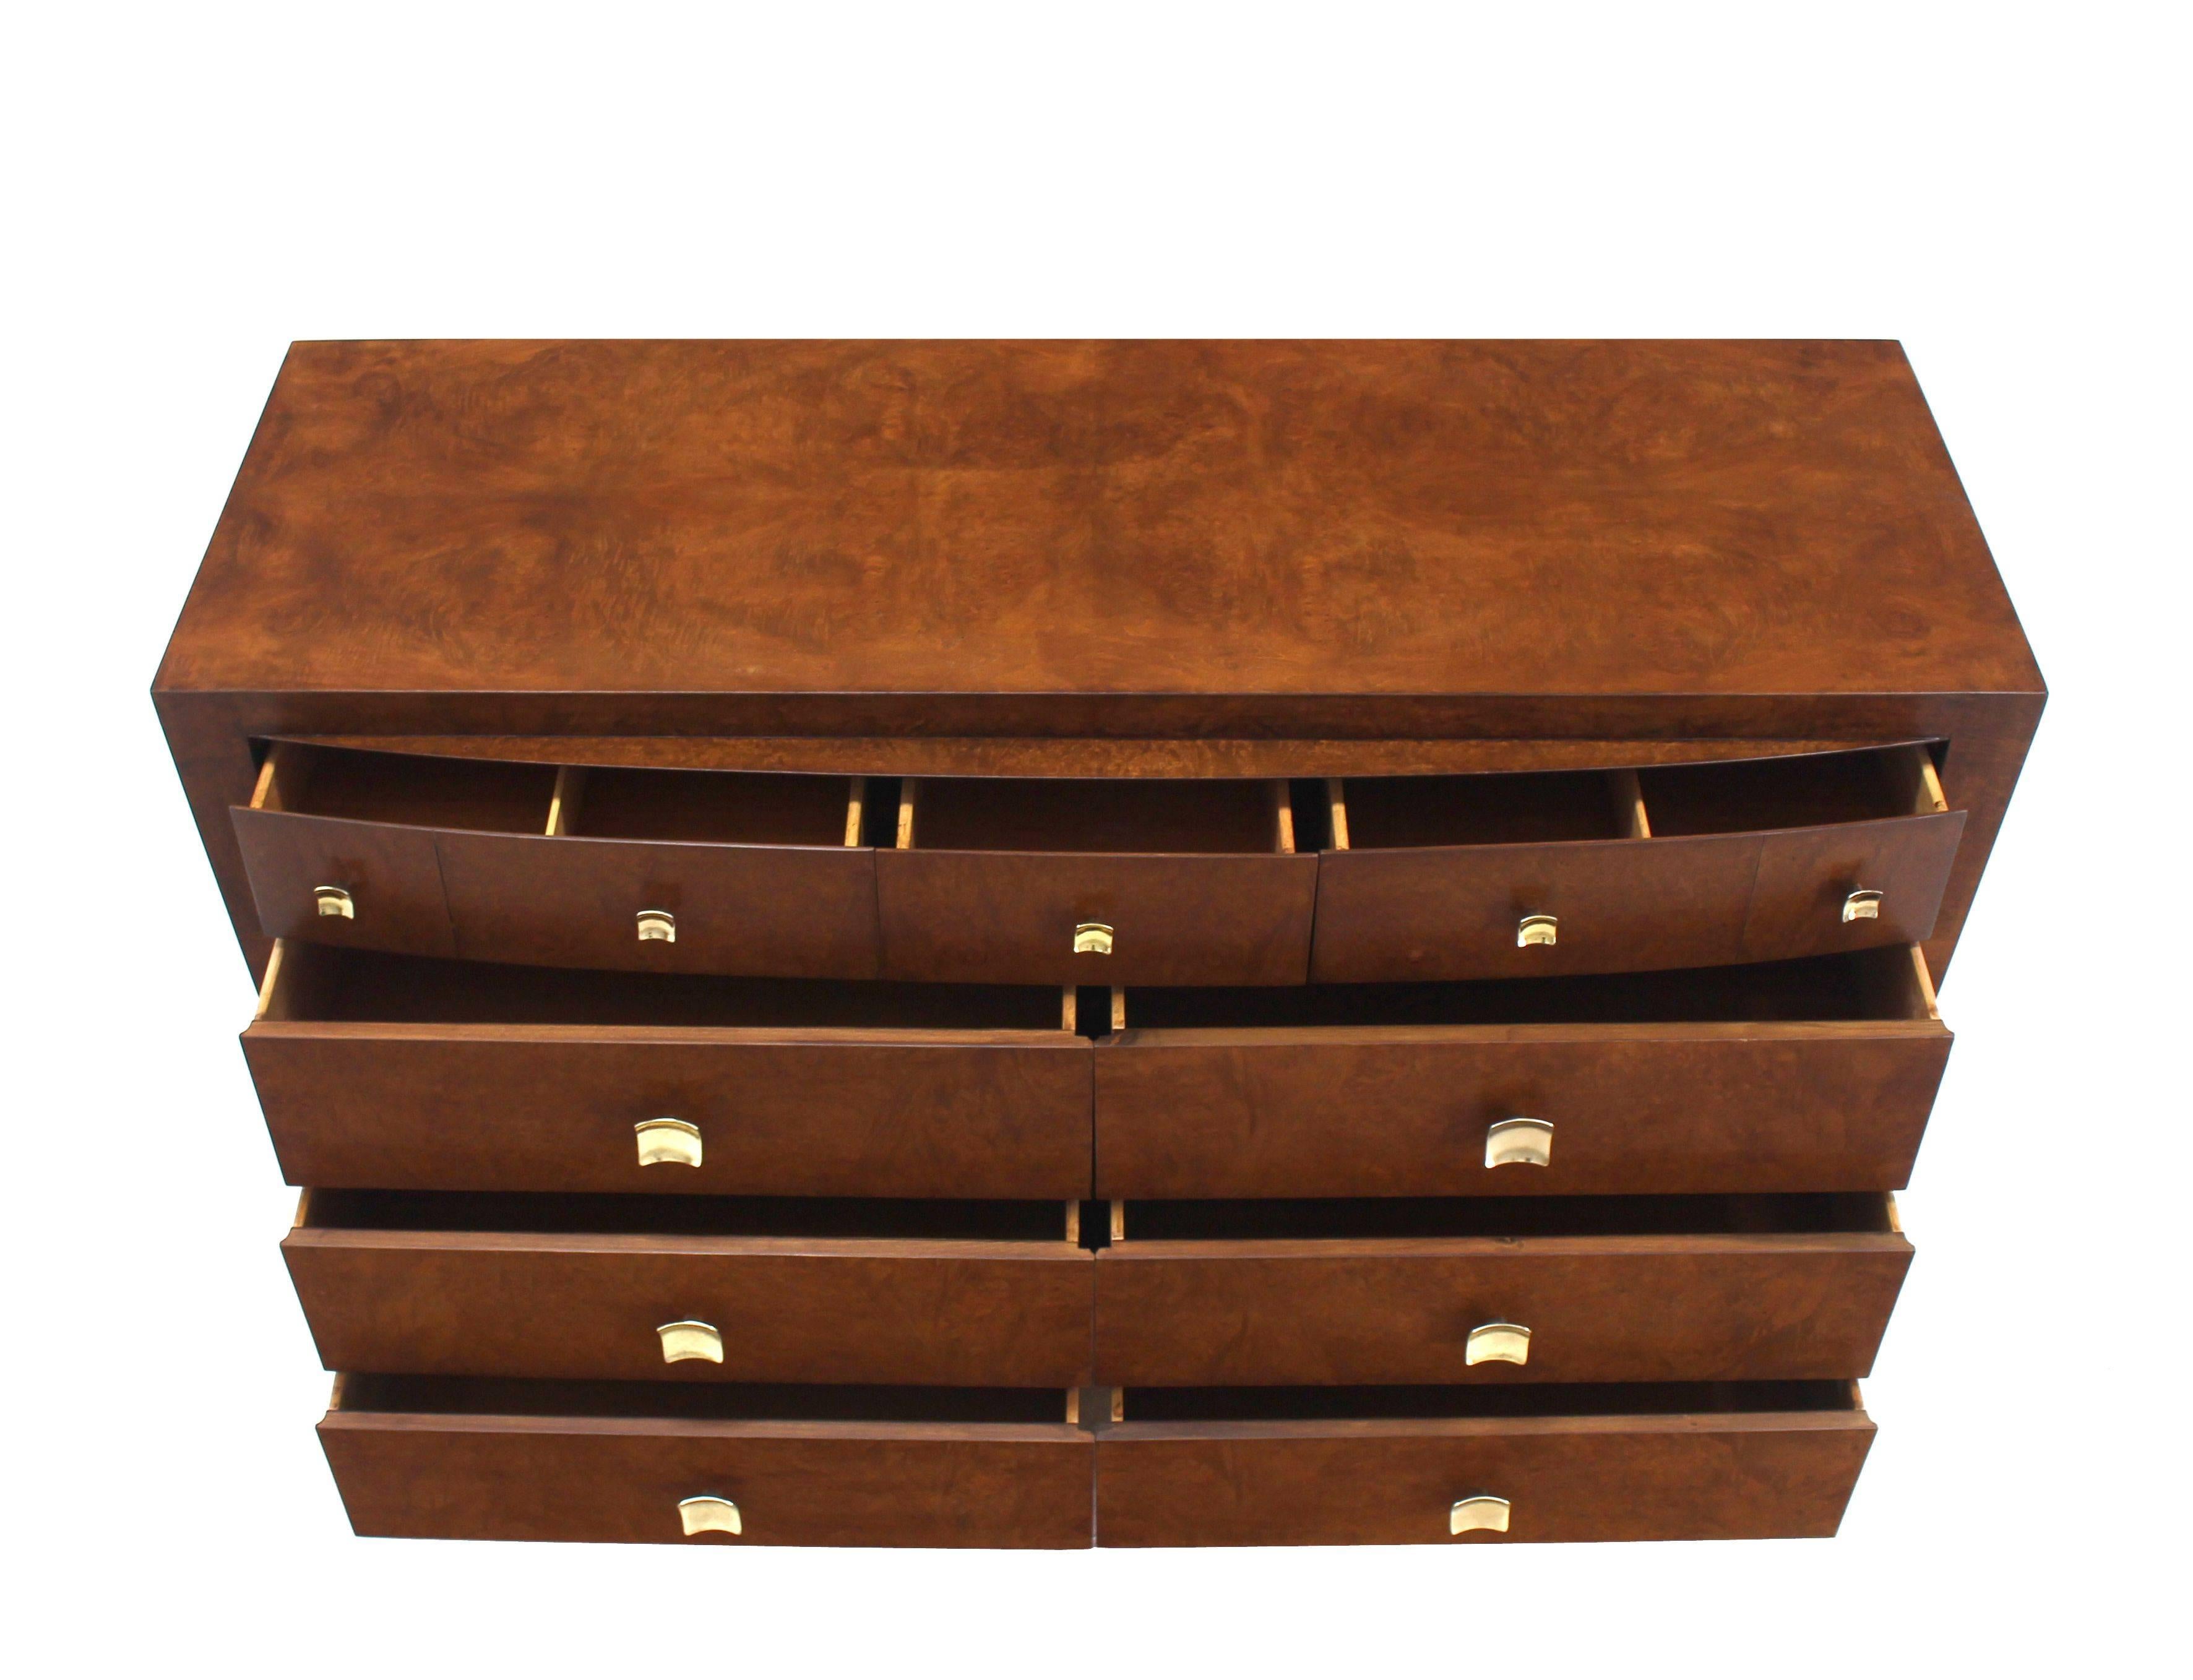 Burl Wood Walnut Brass Hardware Pulls Art Deco Dresser Cabinet Chest of Drawers In Excellent Condition For Sale In Rockaway, NJ